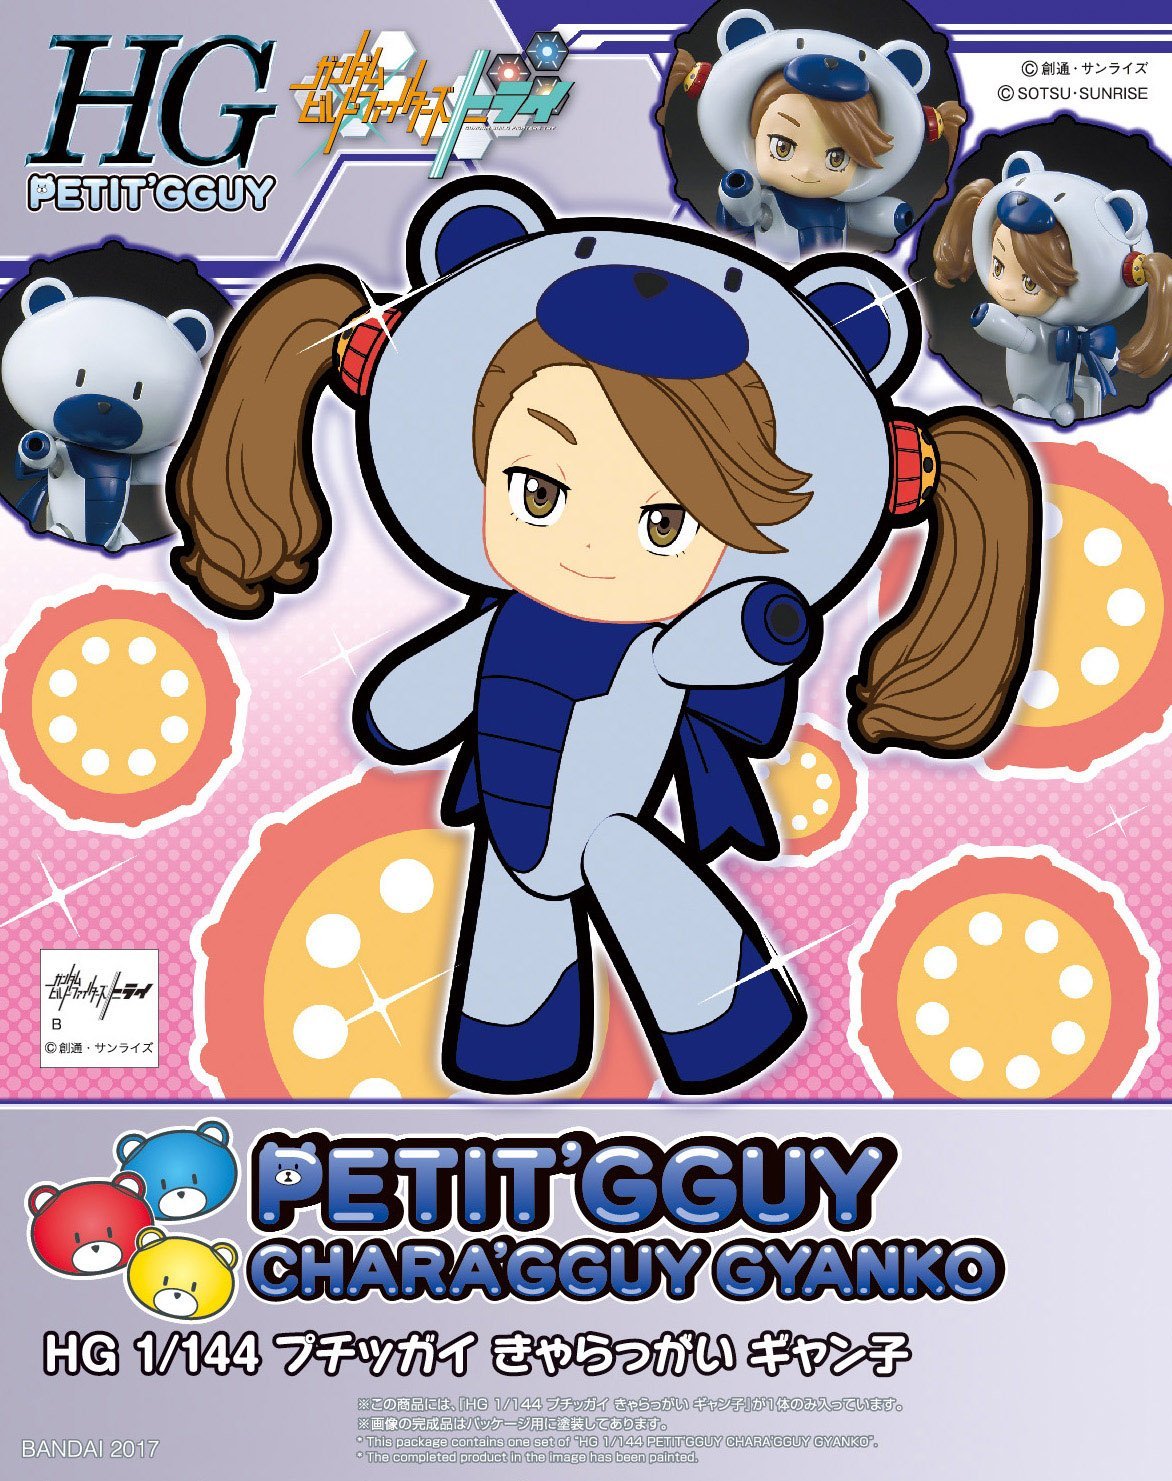 Gundam HGPG Petit'Gguy #18 Chara'gguy Gyanko Build Fighters Bear Guy Model Kit